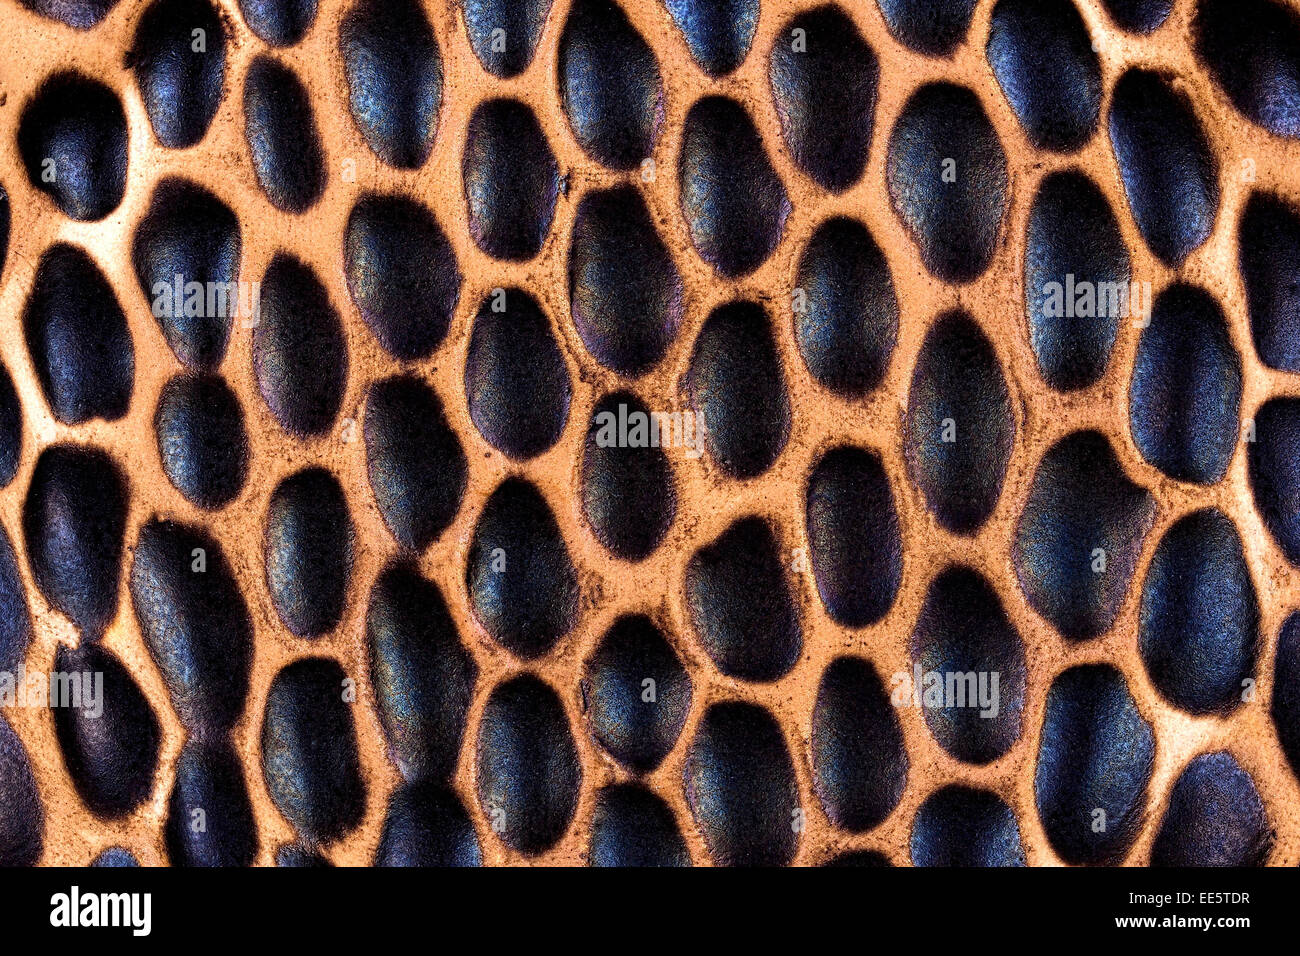 Stone background in animal skin pattern Stock Photo